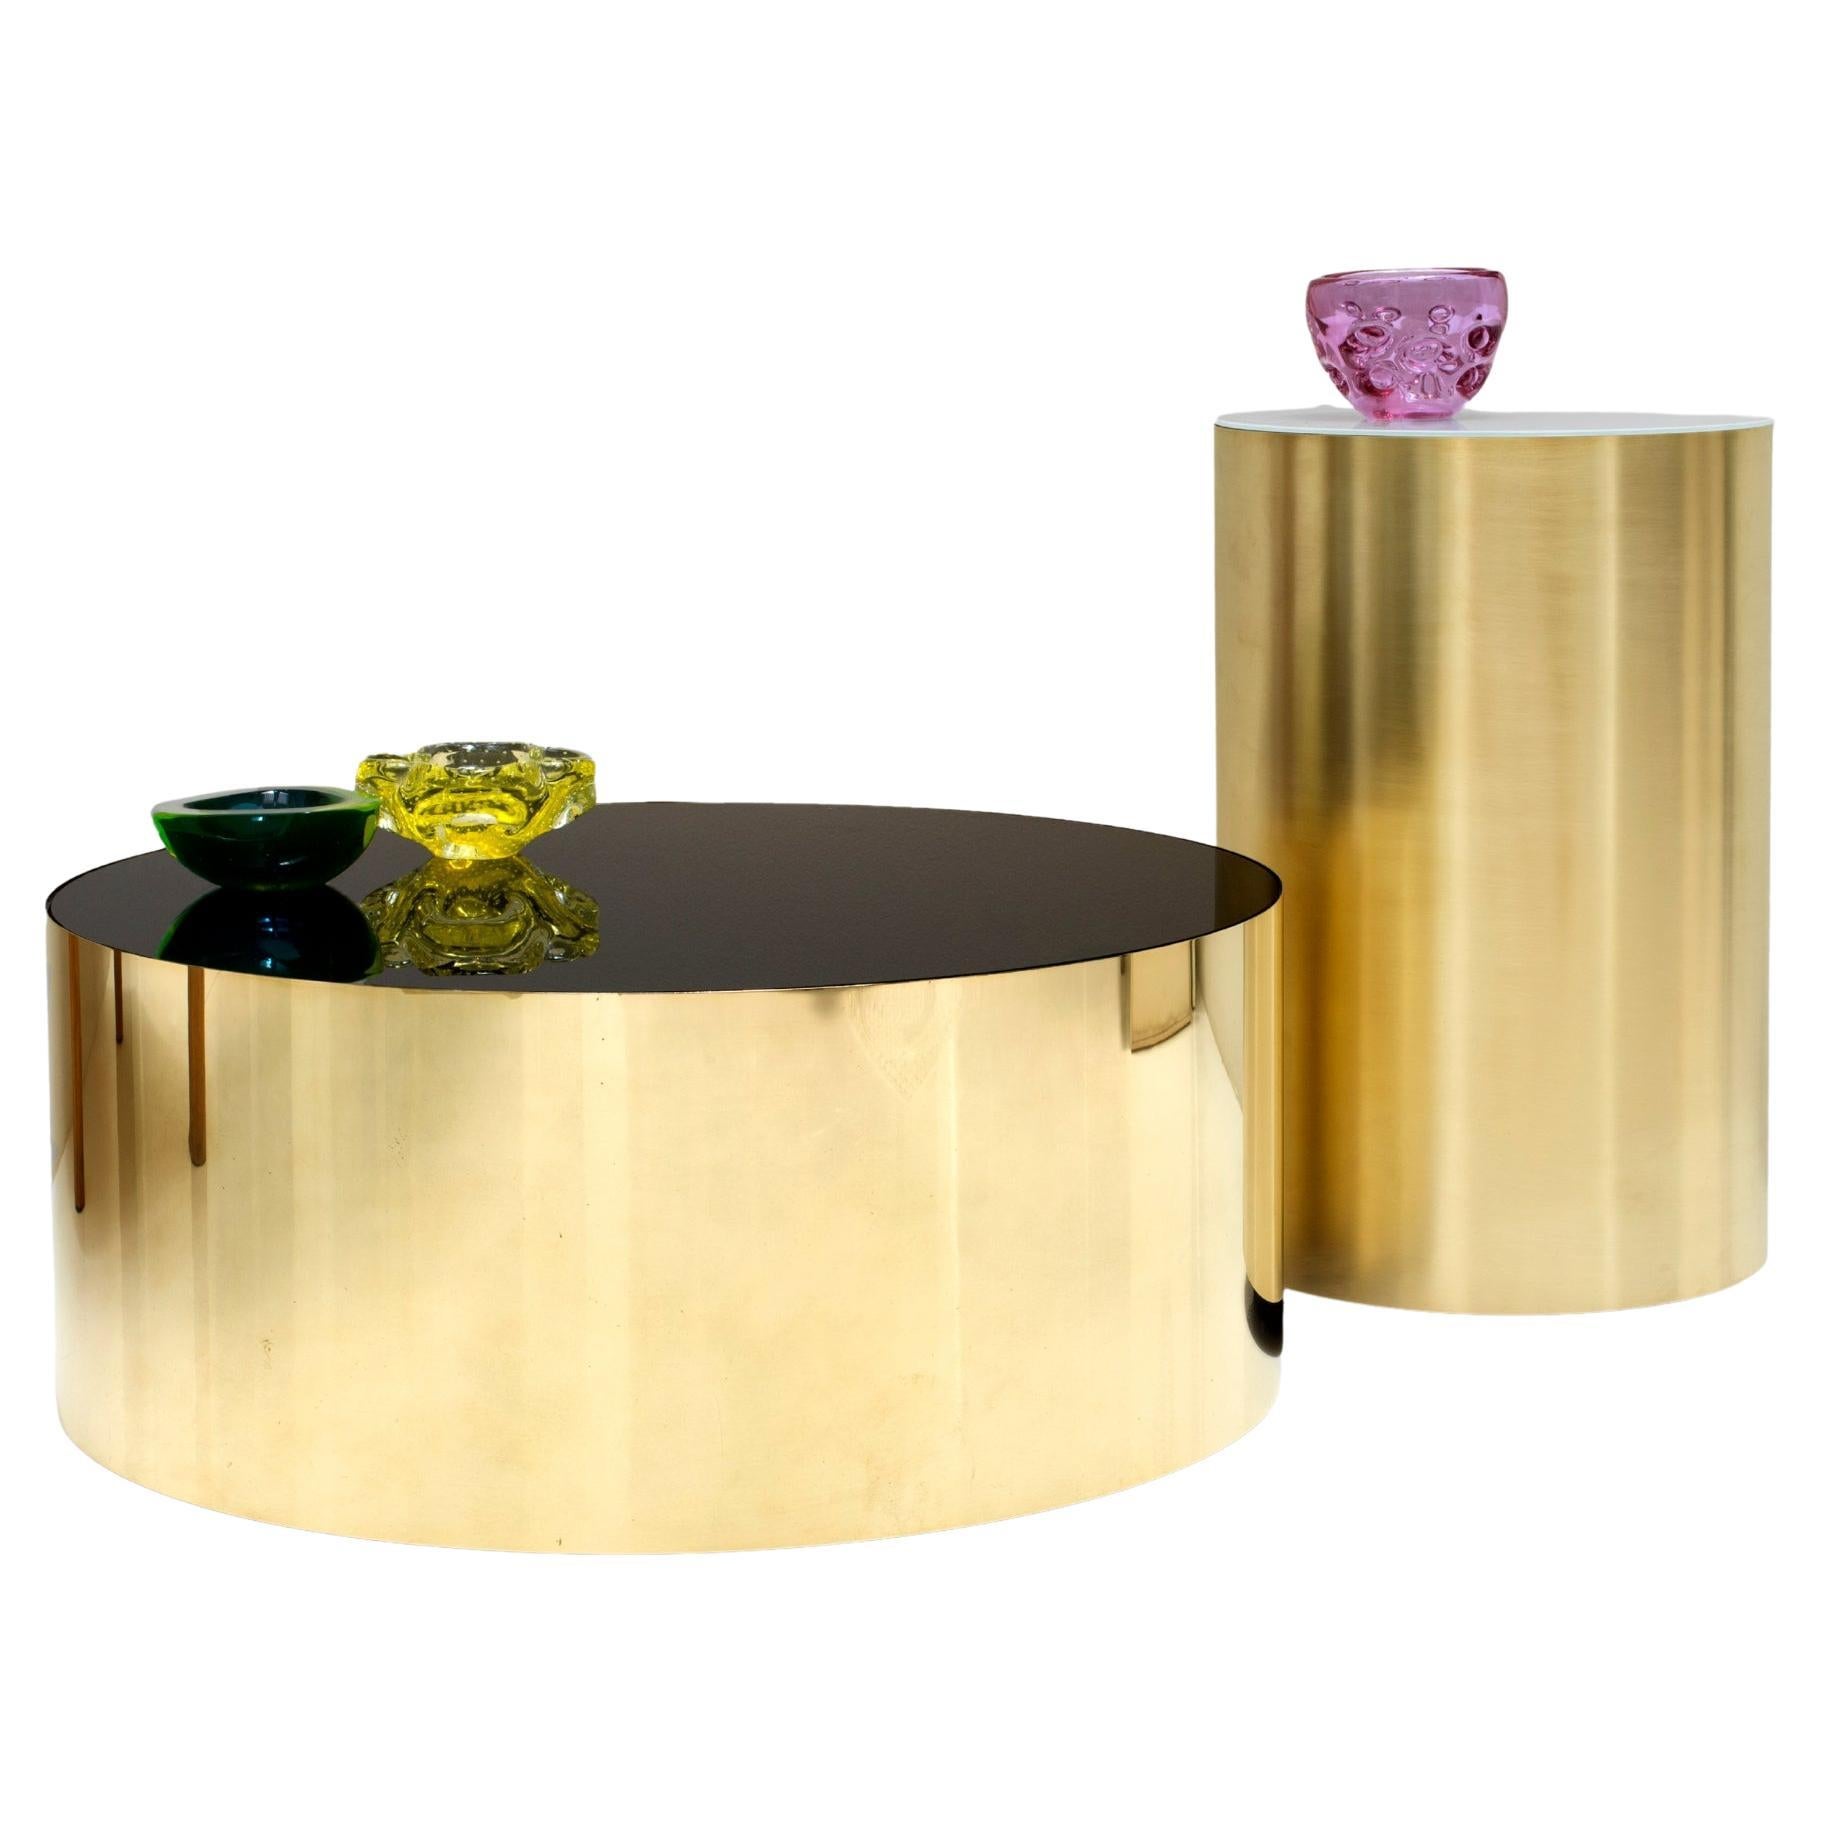 Single Side Table, Full Moon Shape, Brass/Steel & HighGloss Laminate, Size L